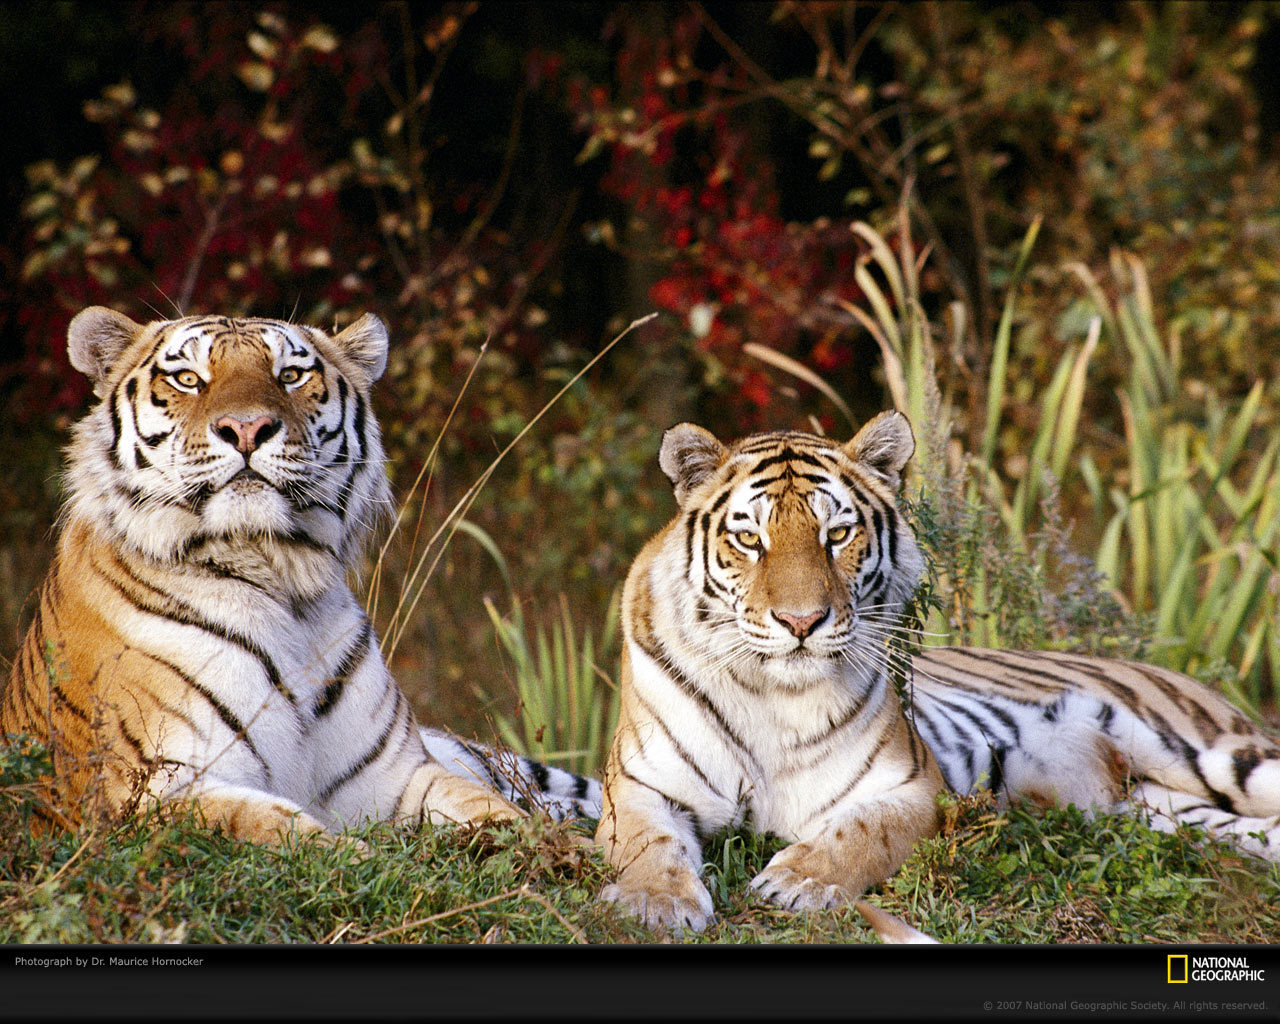  Tiger wallpaper